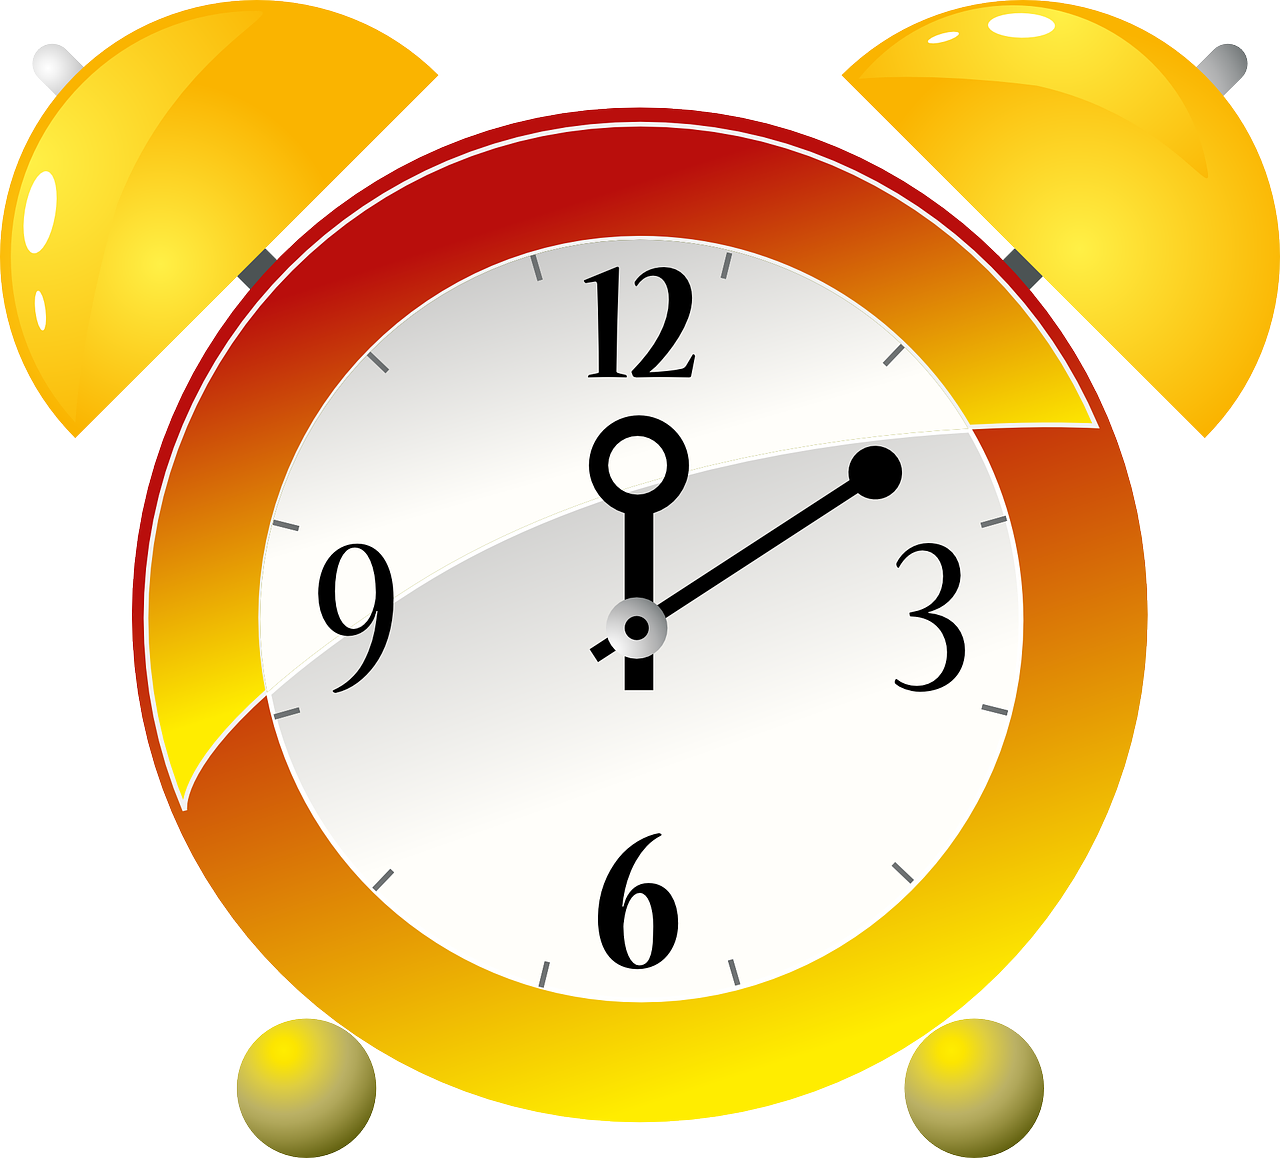 Download PNG image - Analog Alarm Clock PNG Transparent Image 